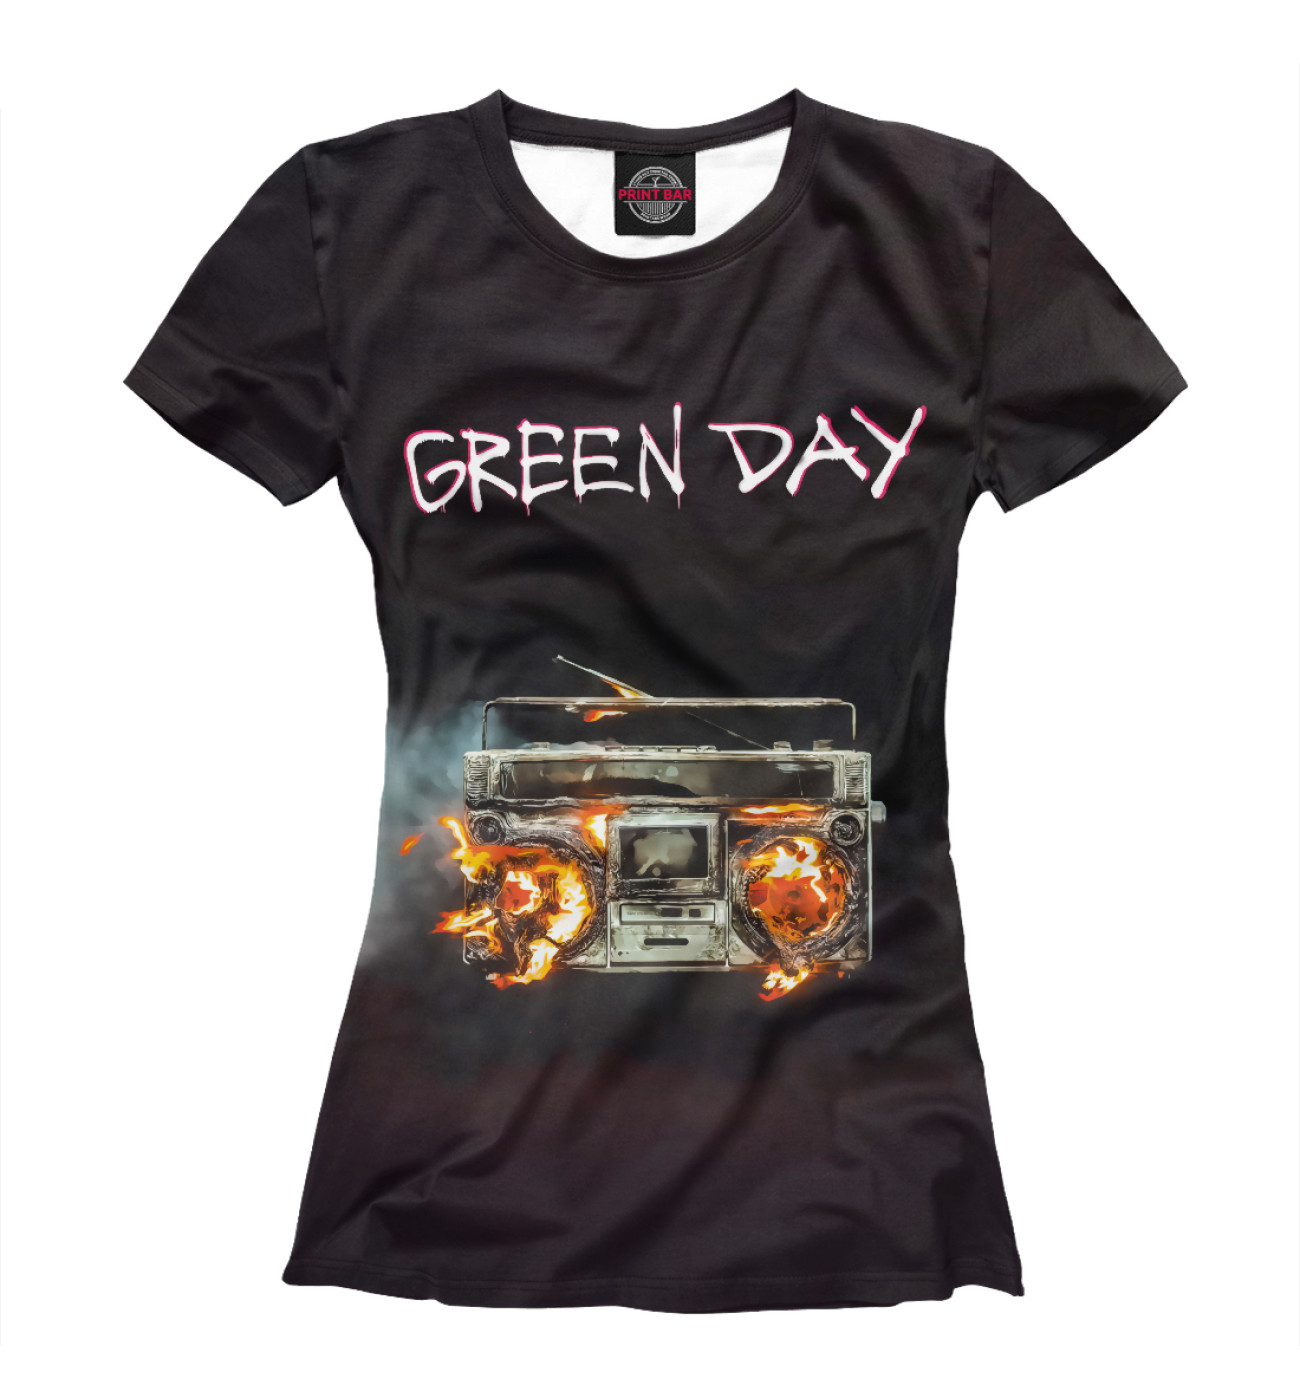 Женская Футболка Green Day альбом, артикул: GRE-845038-fut-1